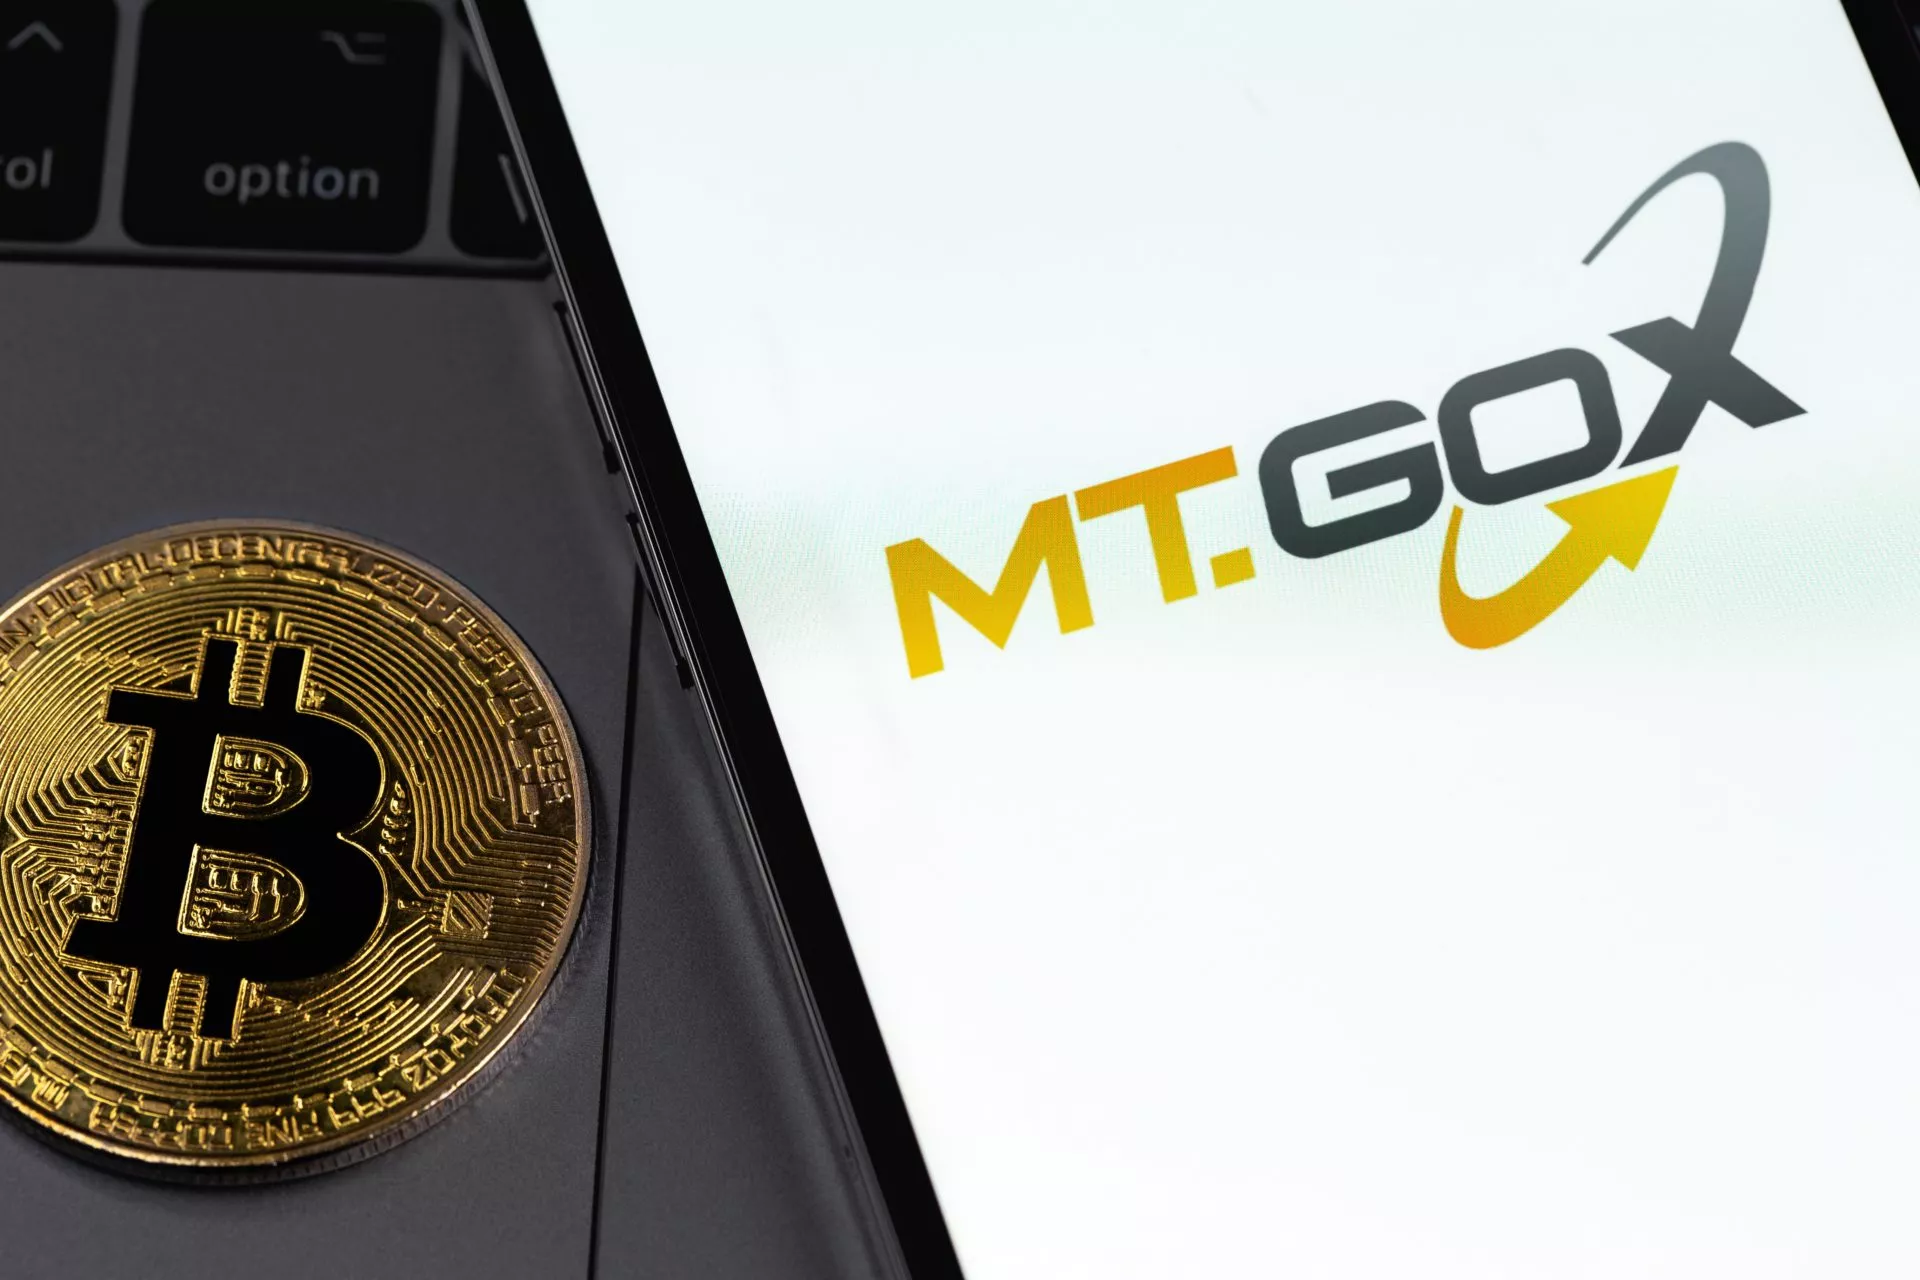 MT. GOX logo on screen smartphone